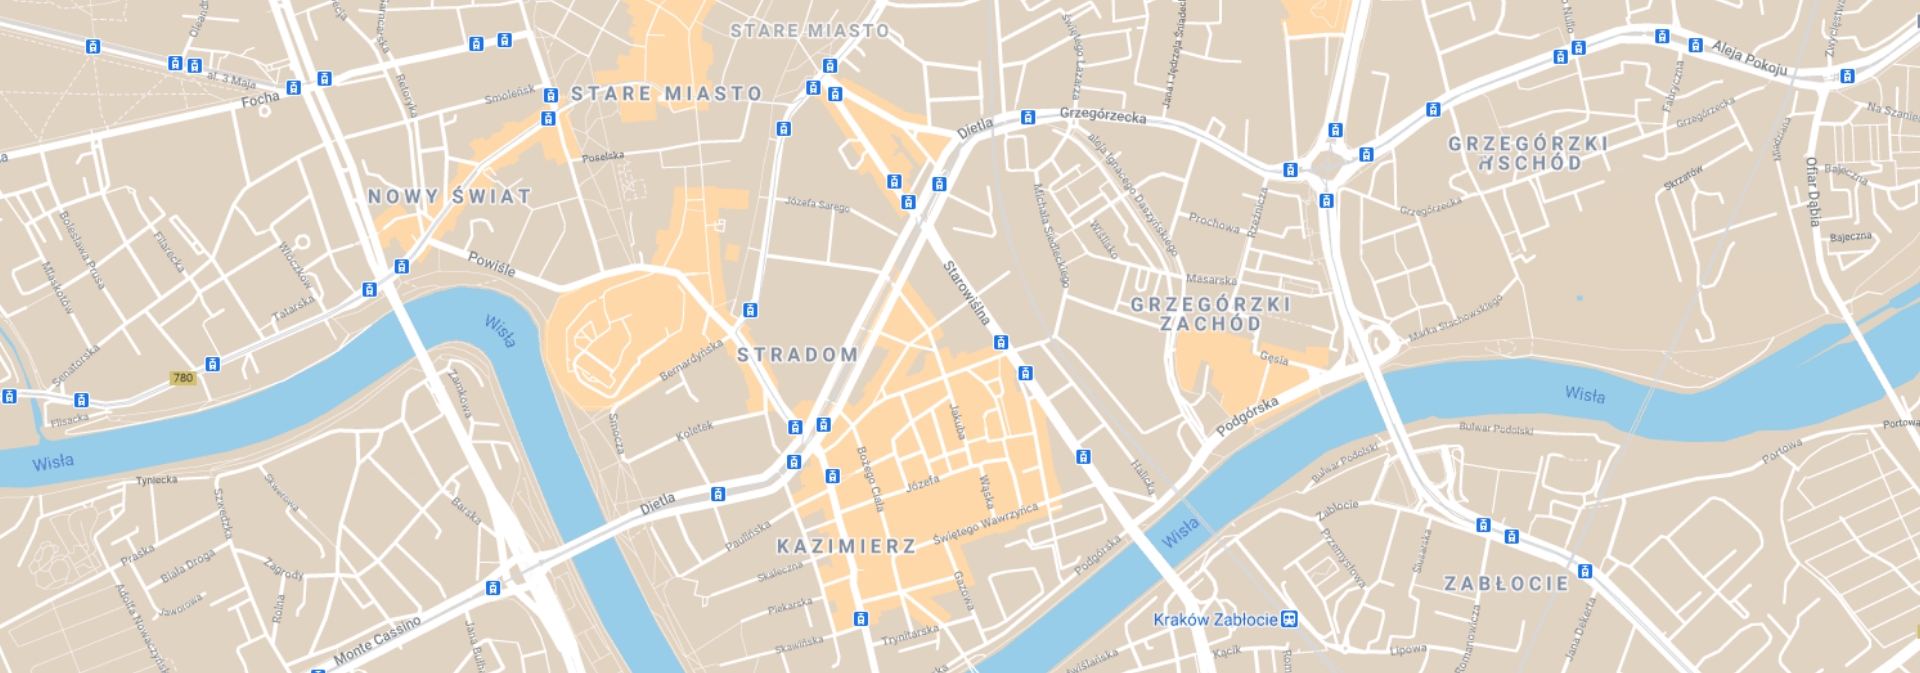 Mapa.jpg